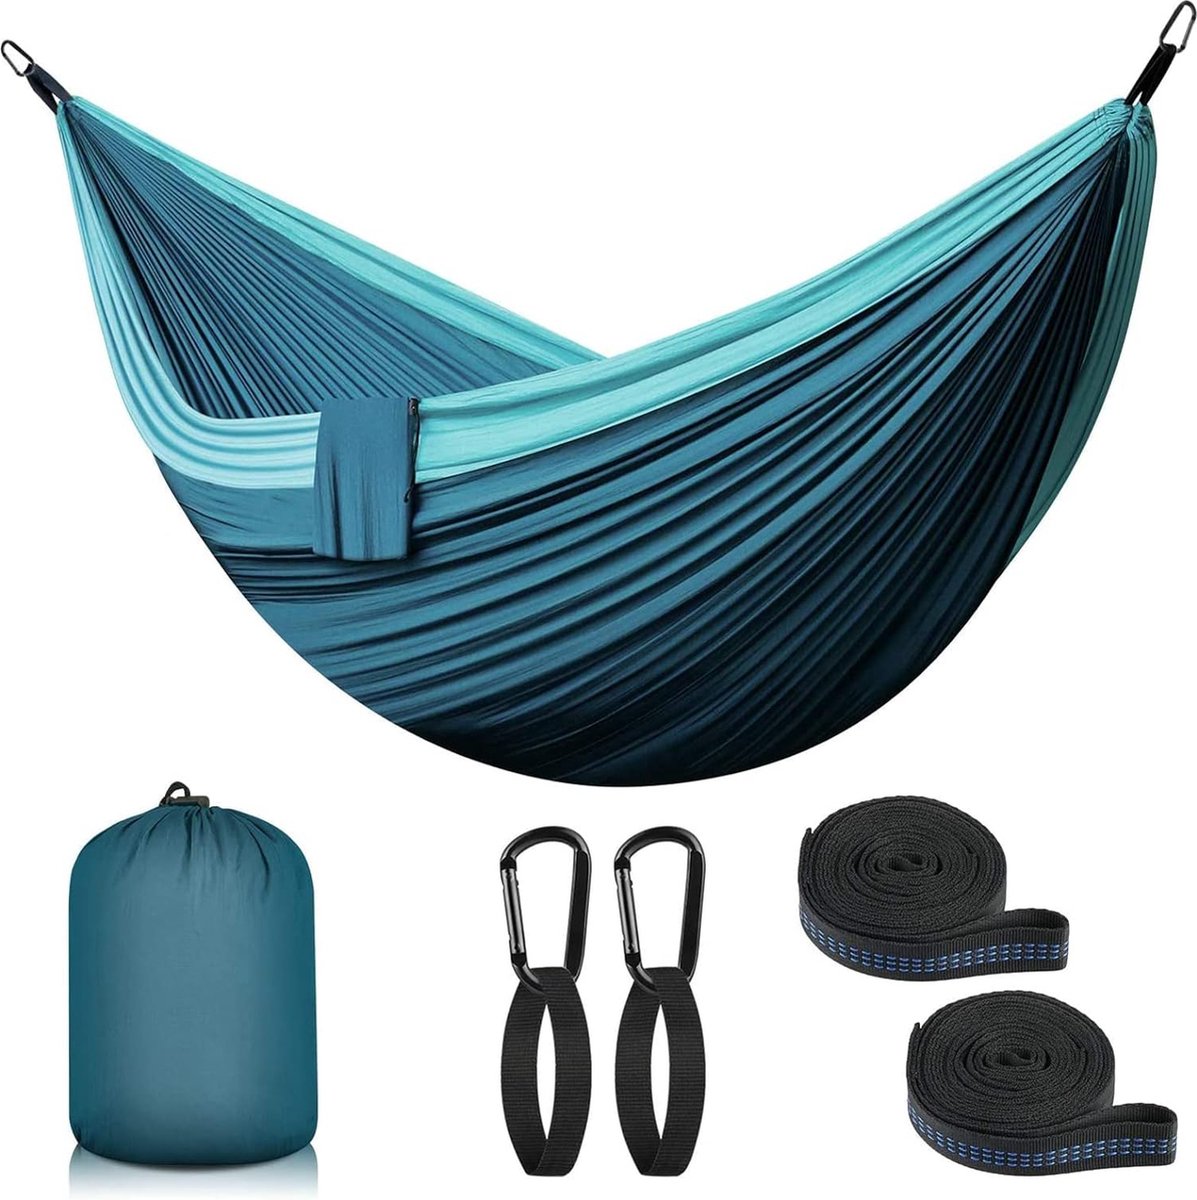 Hangmat outdoor camping hangmatten 2 personen 300 x 200 cm ultralicht draagbaar reishangmat tot 300 kg draagvermogen tuin strand dubbele hangmat parachute nylon ademend hangmat